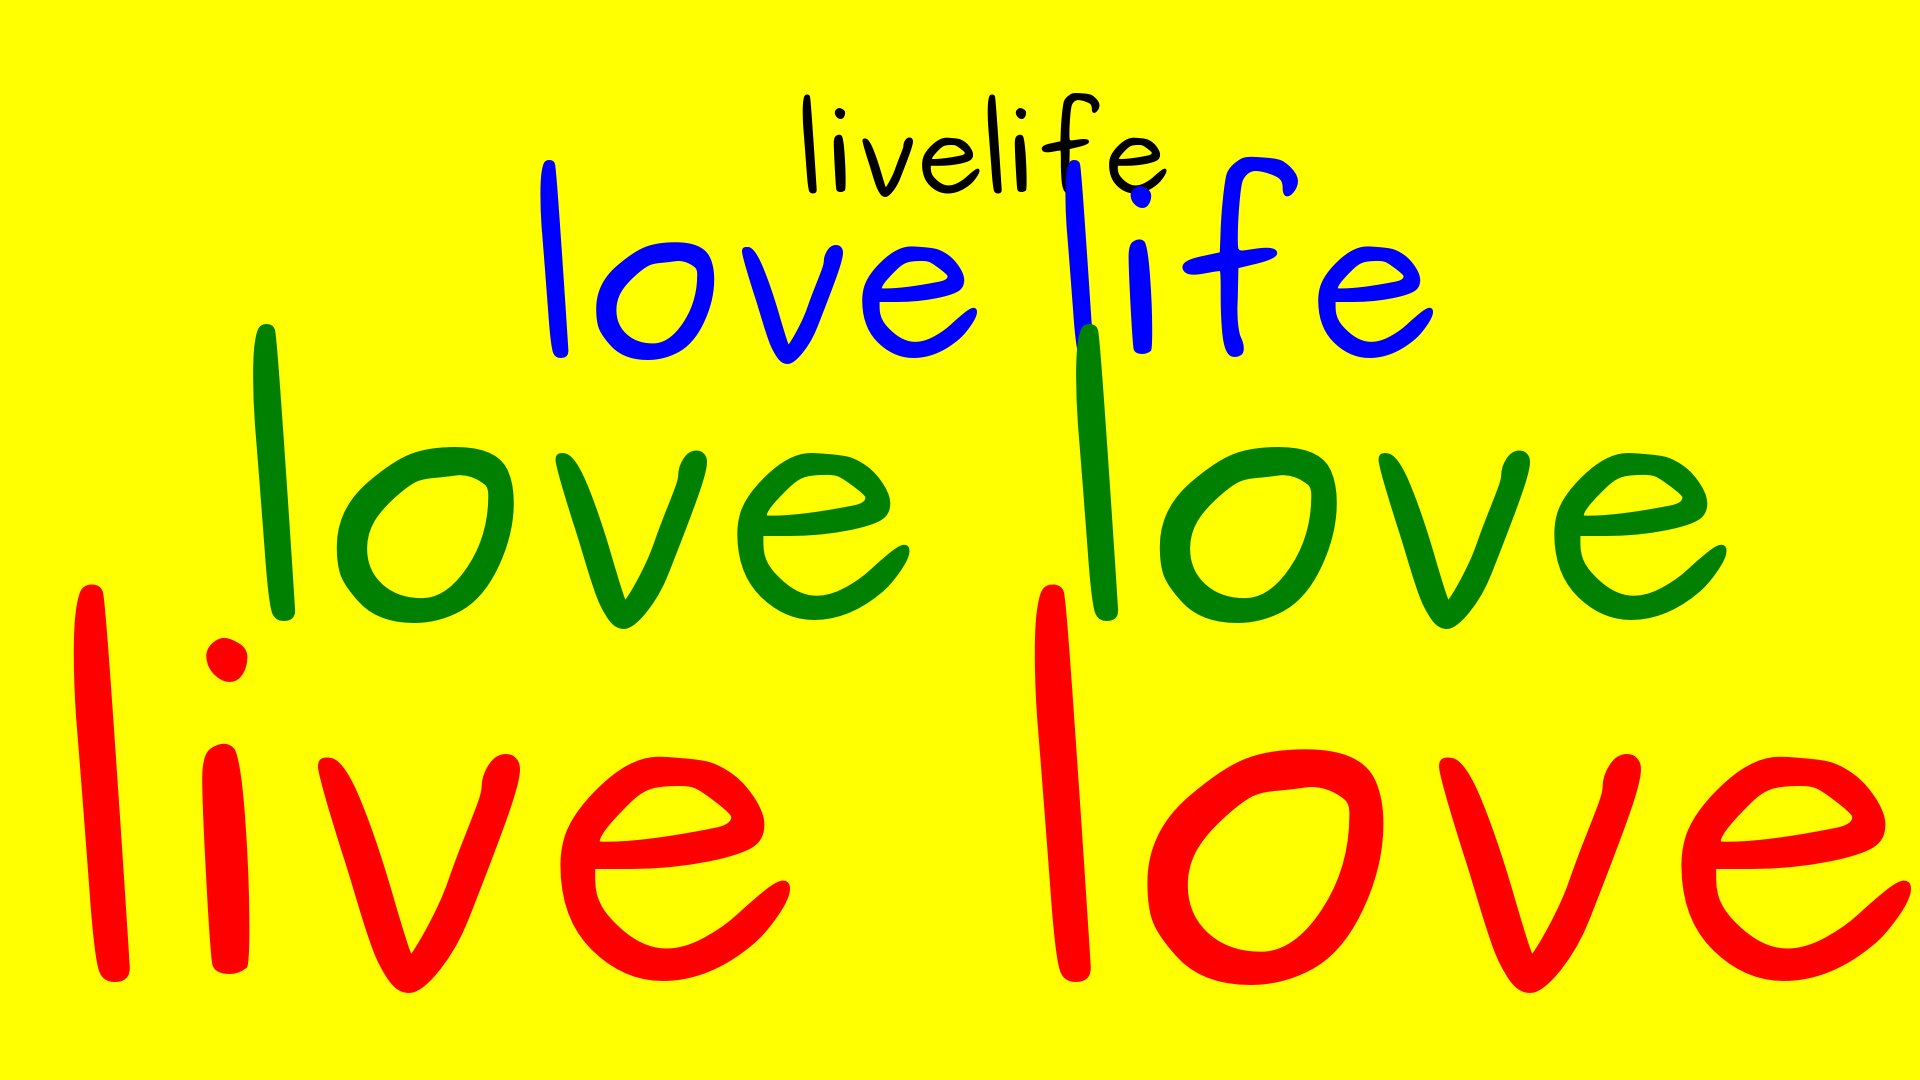 2012-03-06 - Ignition Impression, 4 stages, live life love life live love 477202_214307415337282_1693078451_o.jpg